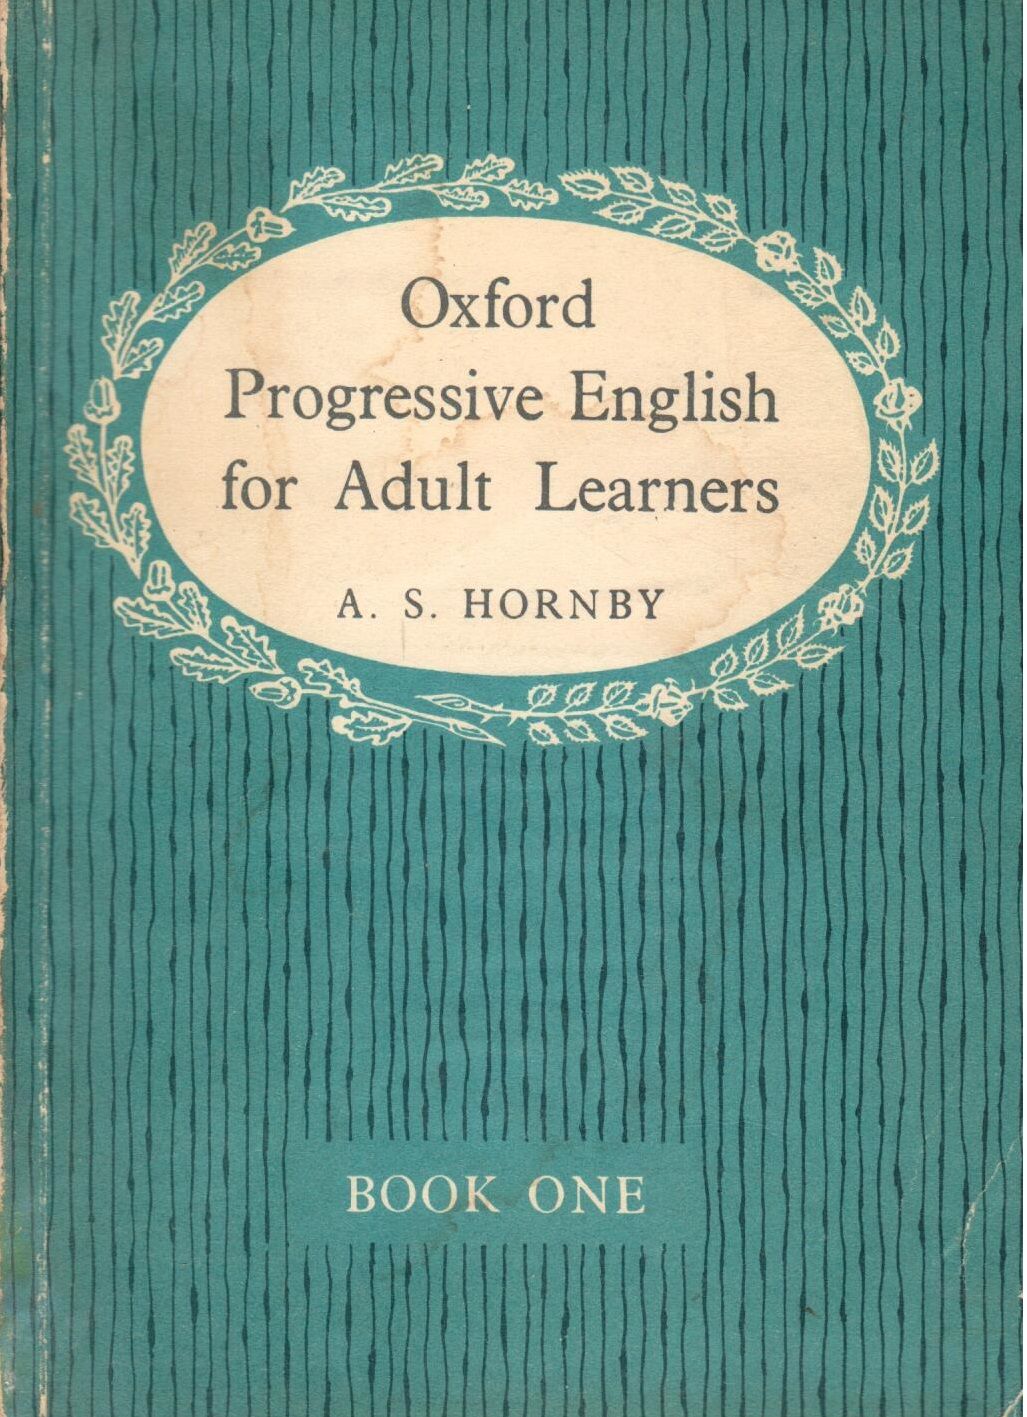 The King's English [Oxford Language Classics Series] 9780198605072